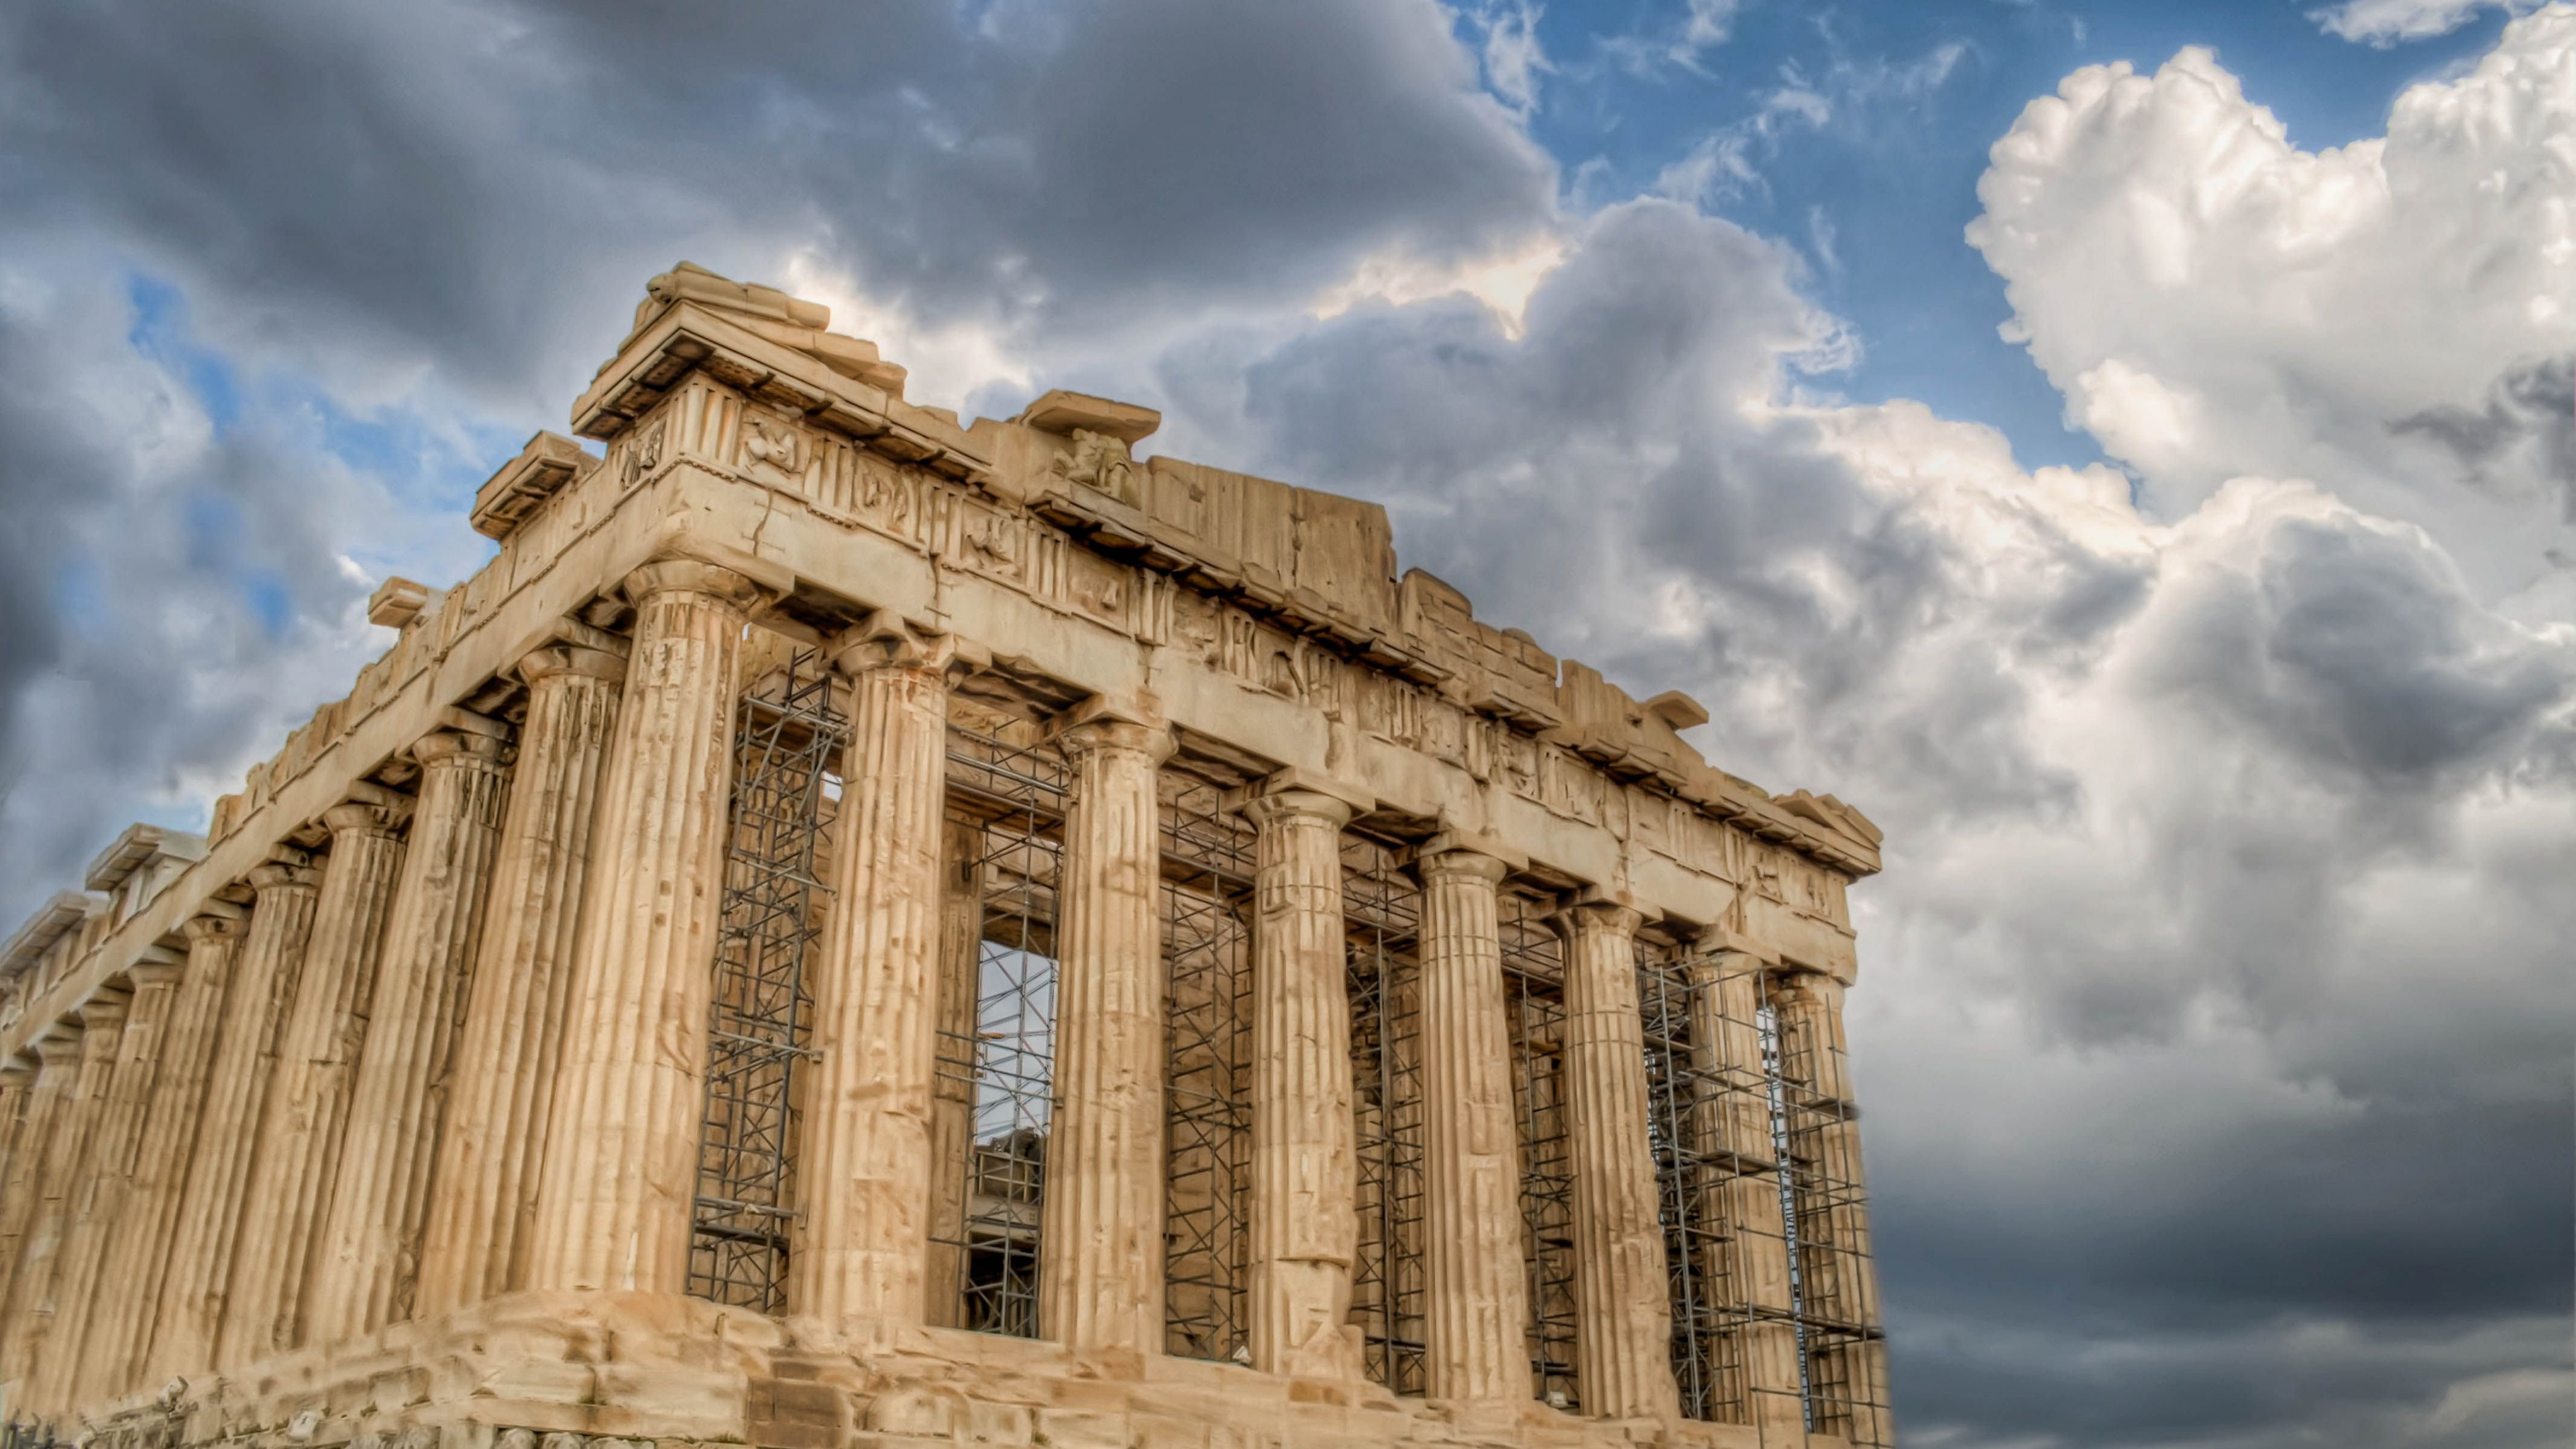 Acropolis, Parthenon temple, Desktop wallpaper, Greek architecture, 3840x2160 4K Desktop